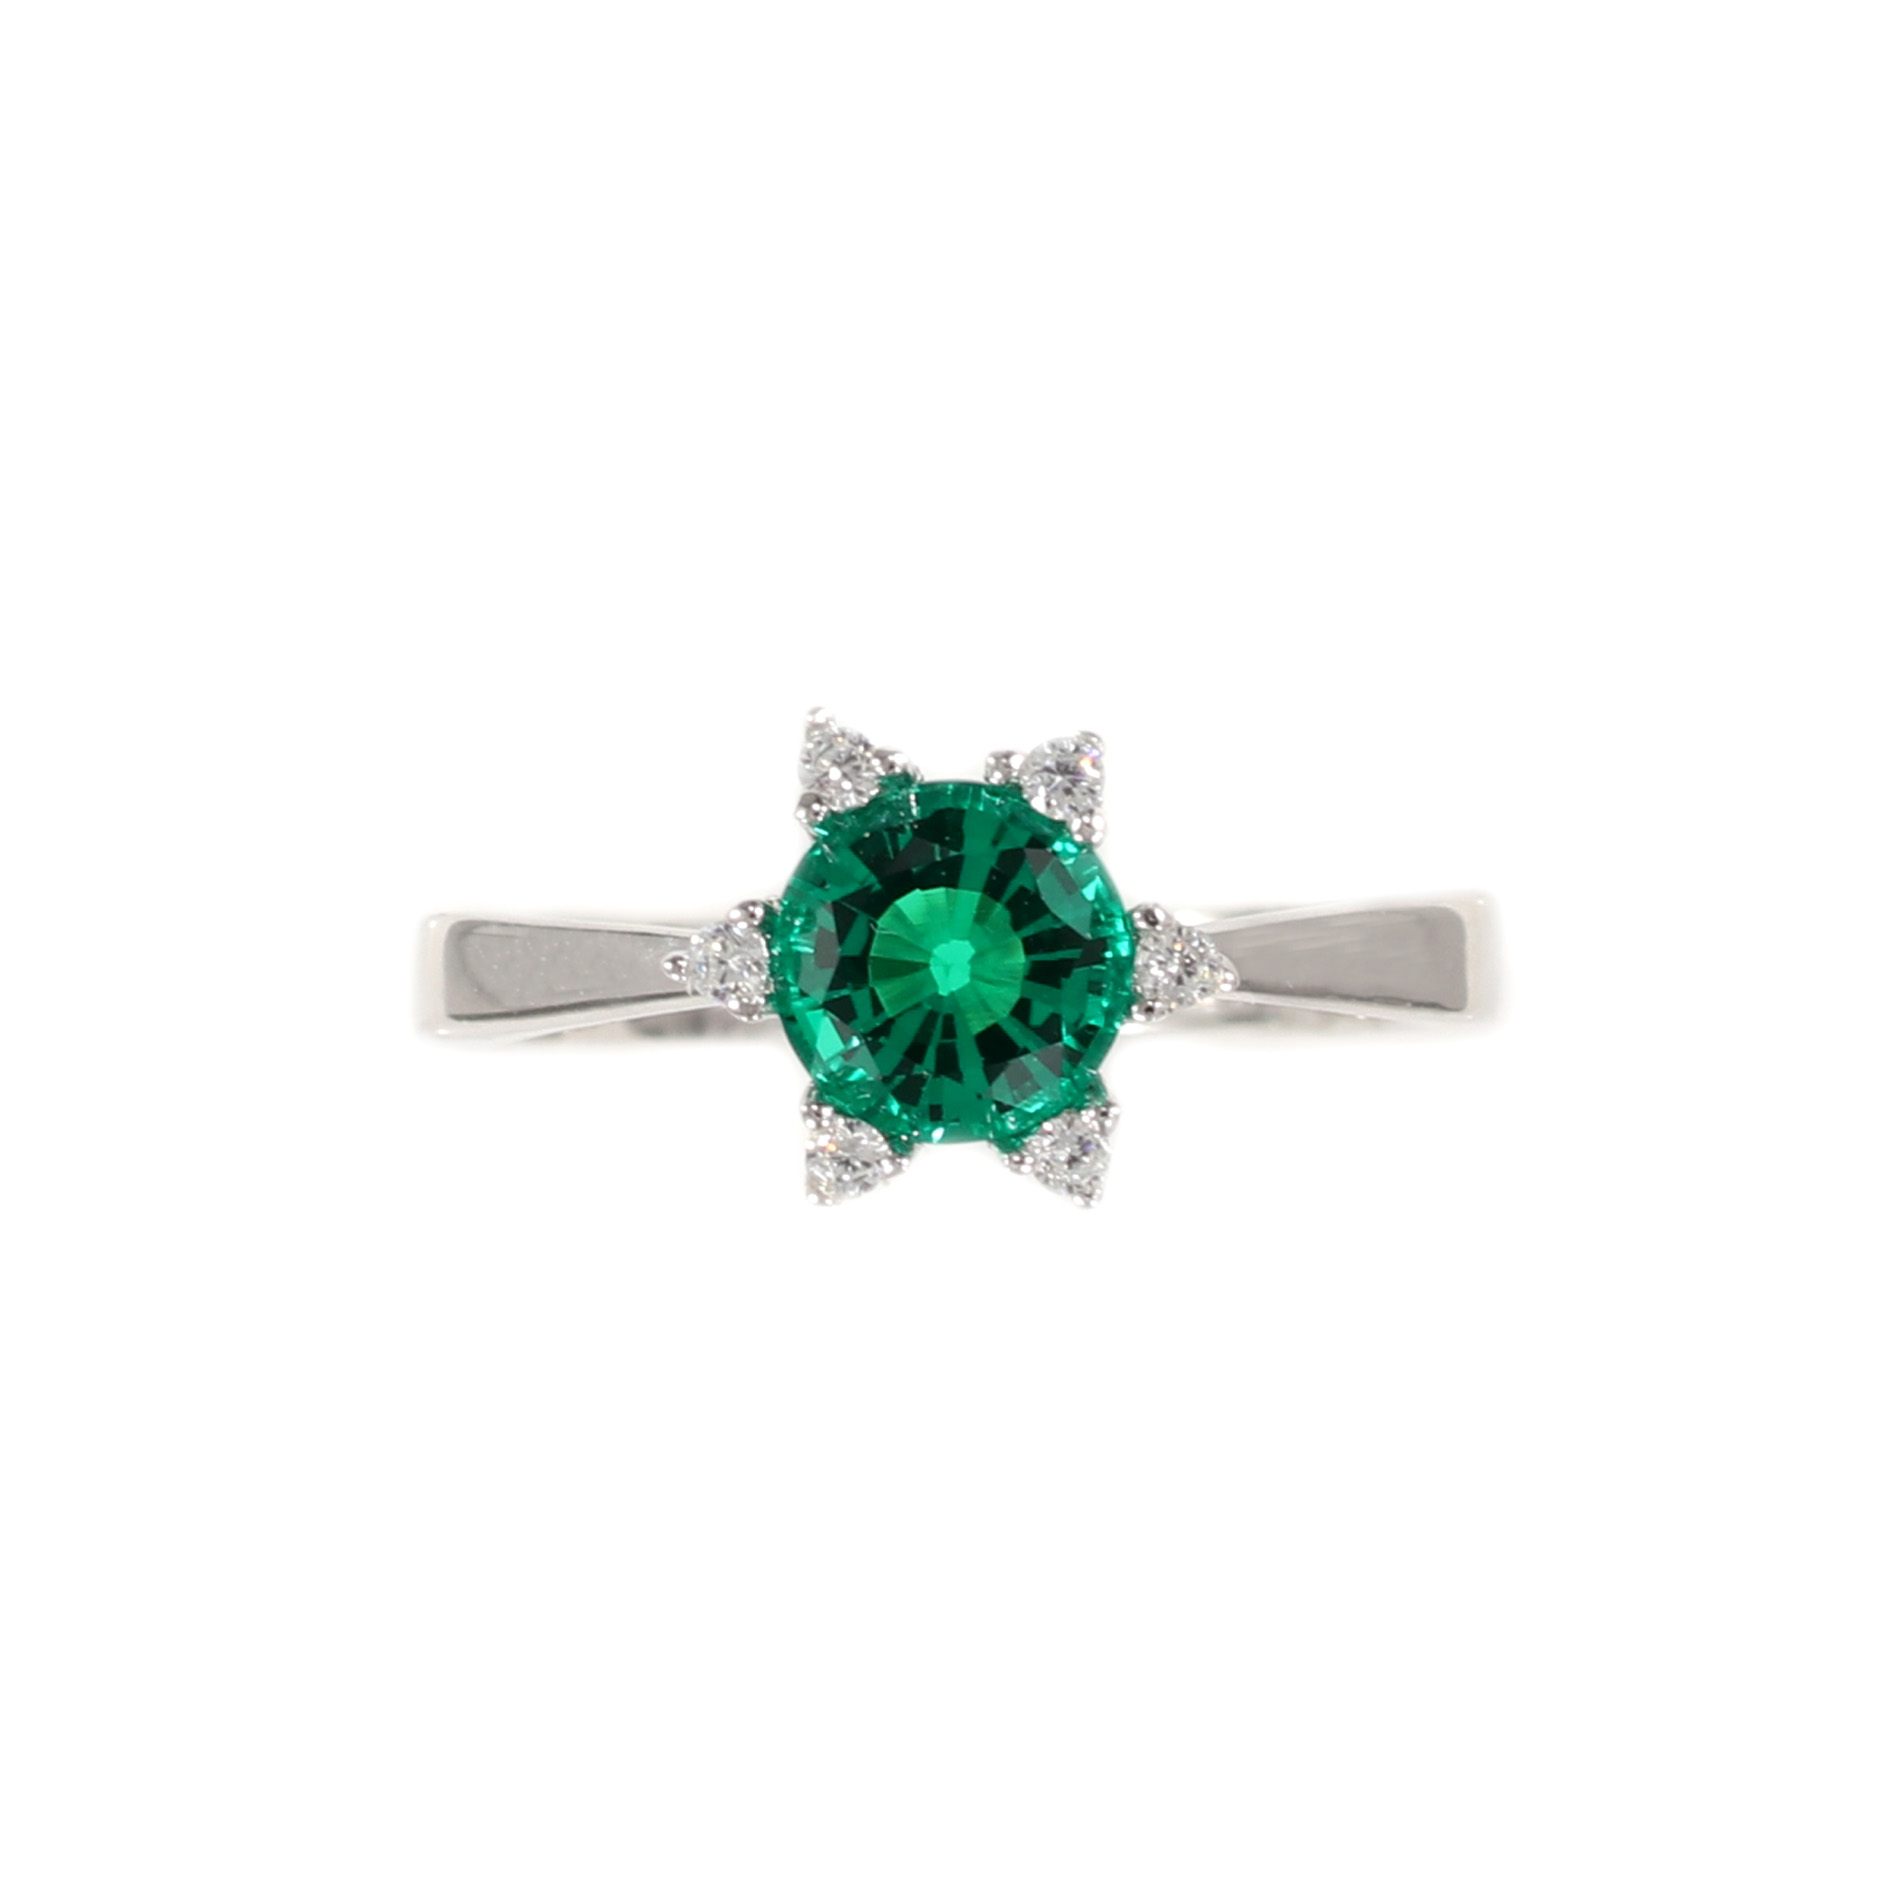 Tamara G Designs | Accented Solitaire Emerald Ring